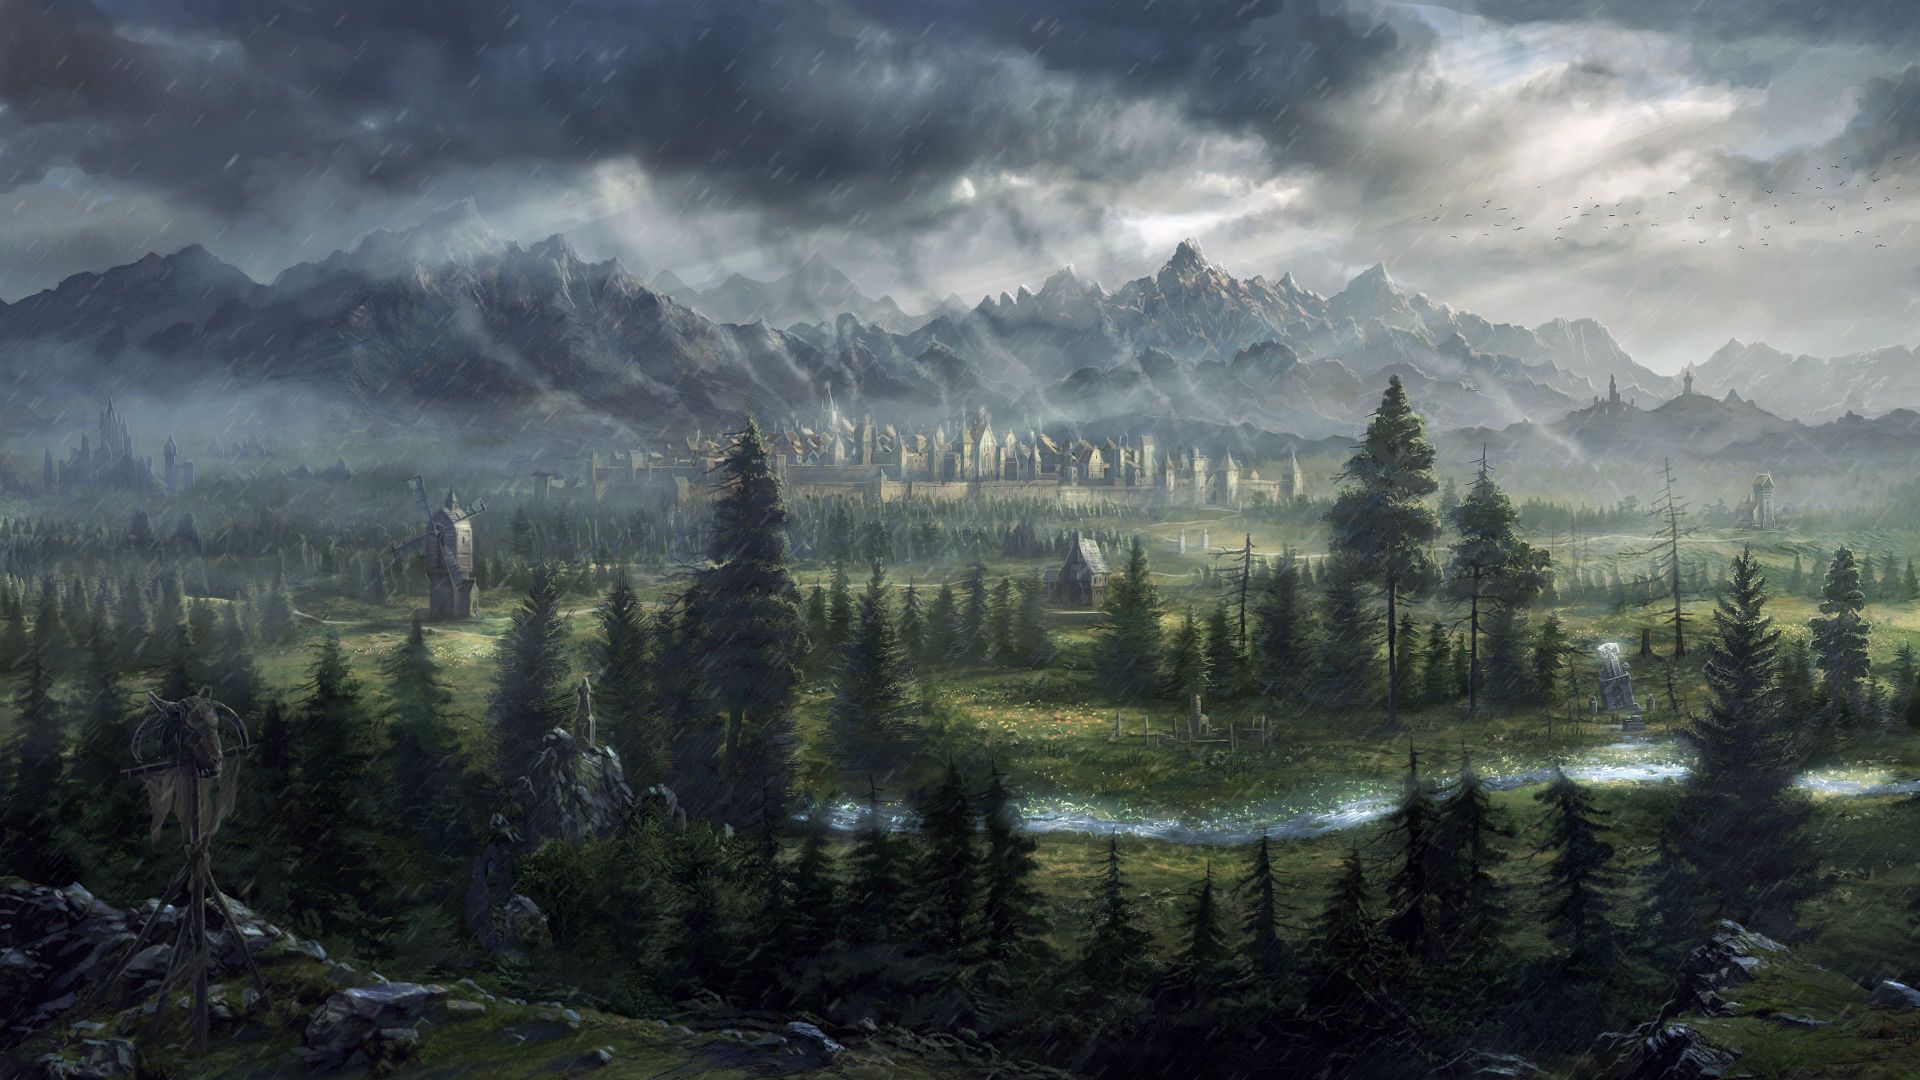 General 1920x1080 digital art fantasy art Total War: Warhammer trees pine trees nature landscape mountains clouds rain rocks stream video games castle